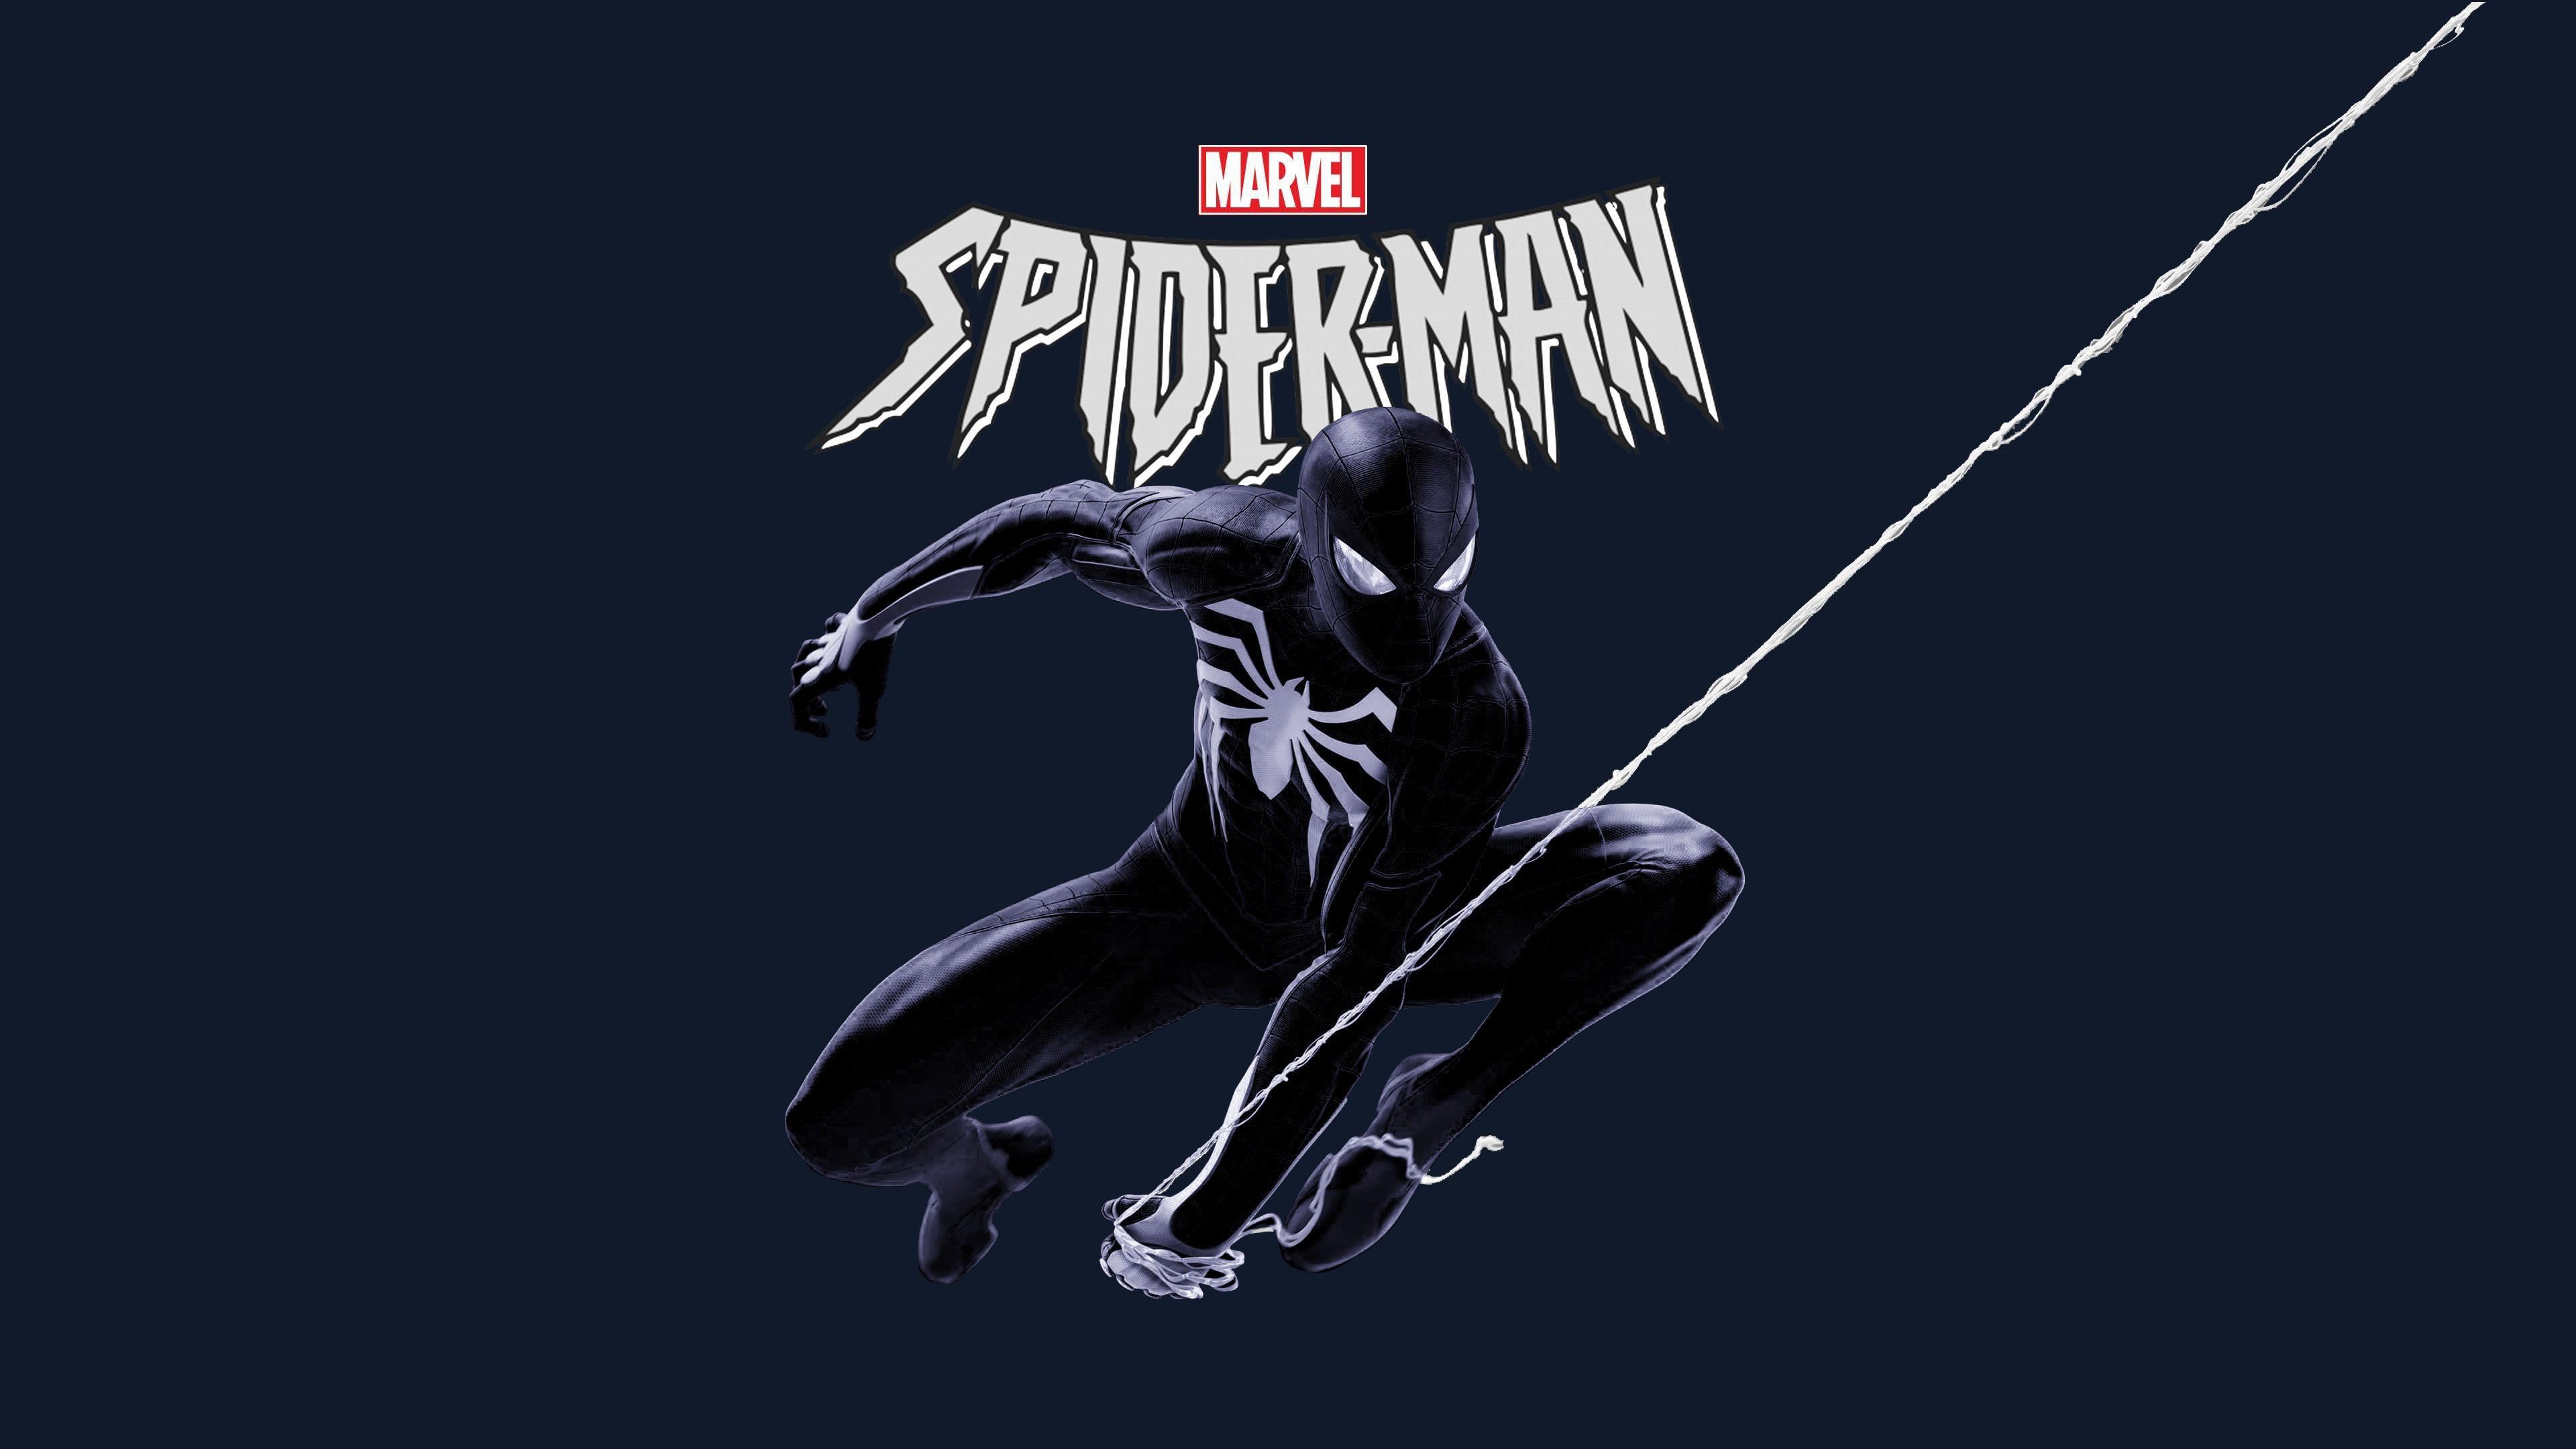 Marvel Black Spiderman 4k Superheroes Wallpaper, Spiderman Wallpaper, Hd Wallpaper, 4k Wallpaper. Symbiote Spiderman, Spiderman, Superhero Wallpaper